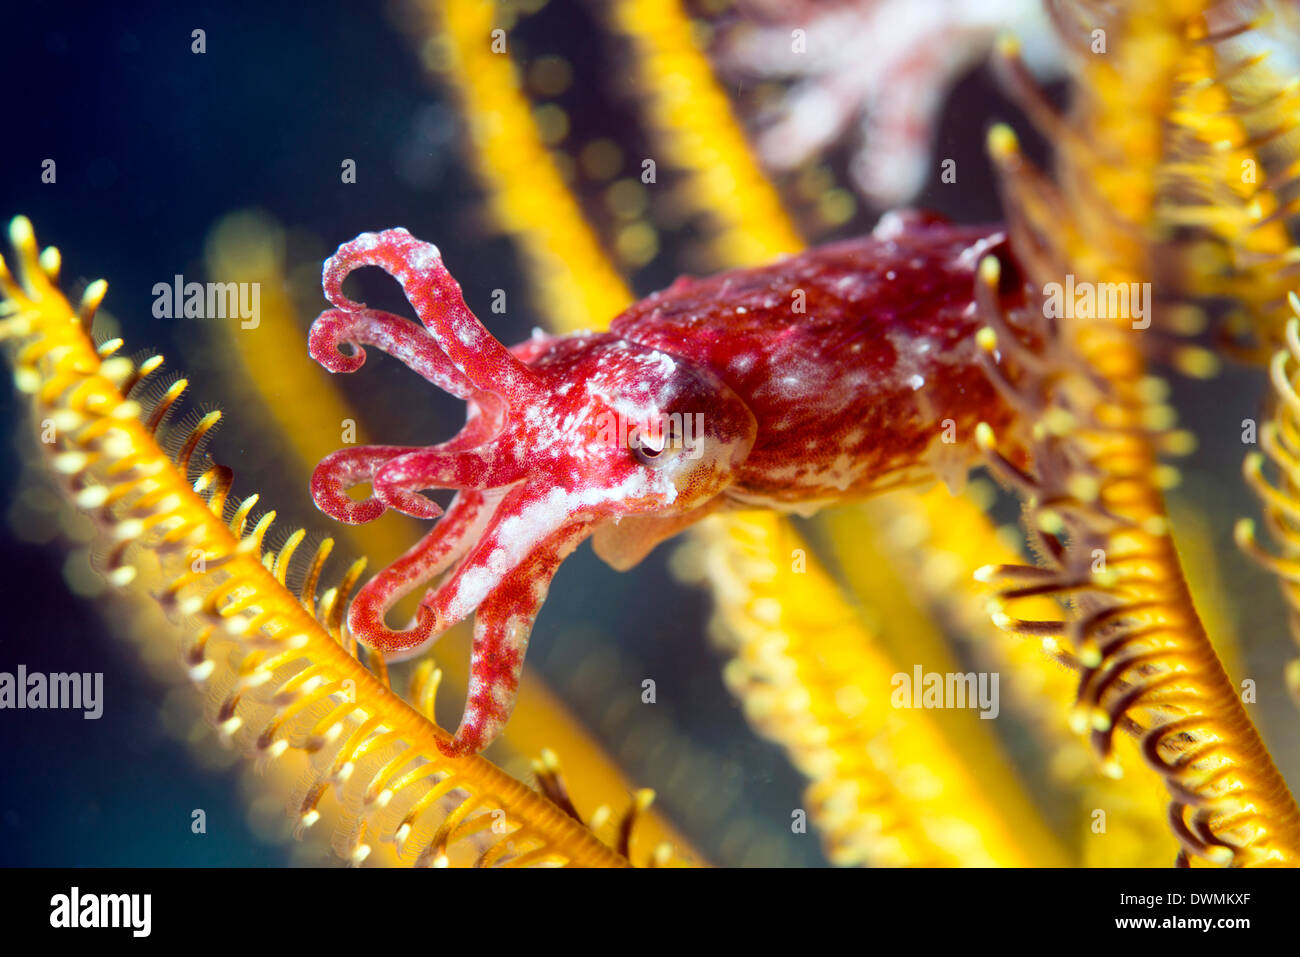 Juvenile cuttlefish (Sepia latimanus) shelters in the arms of a crinoid (featherstar), Celebes Sea, Sabah, Malaysia Stock Photo